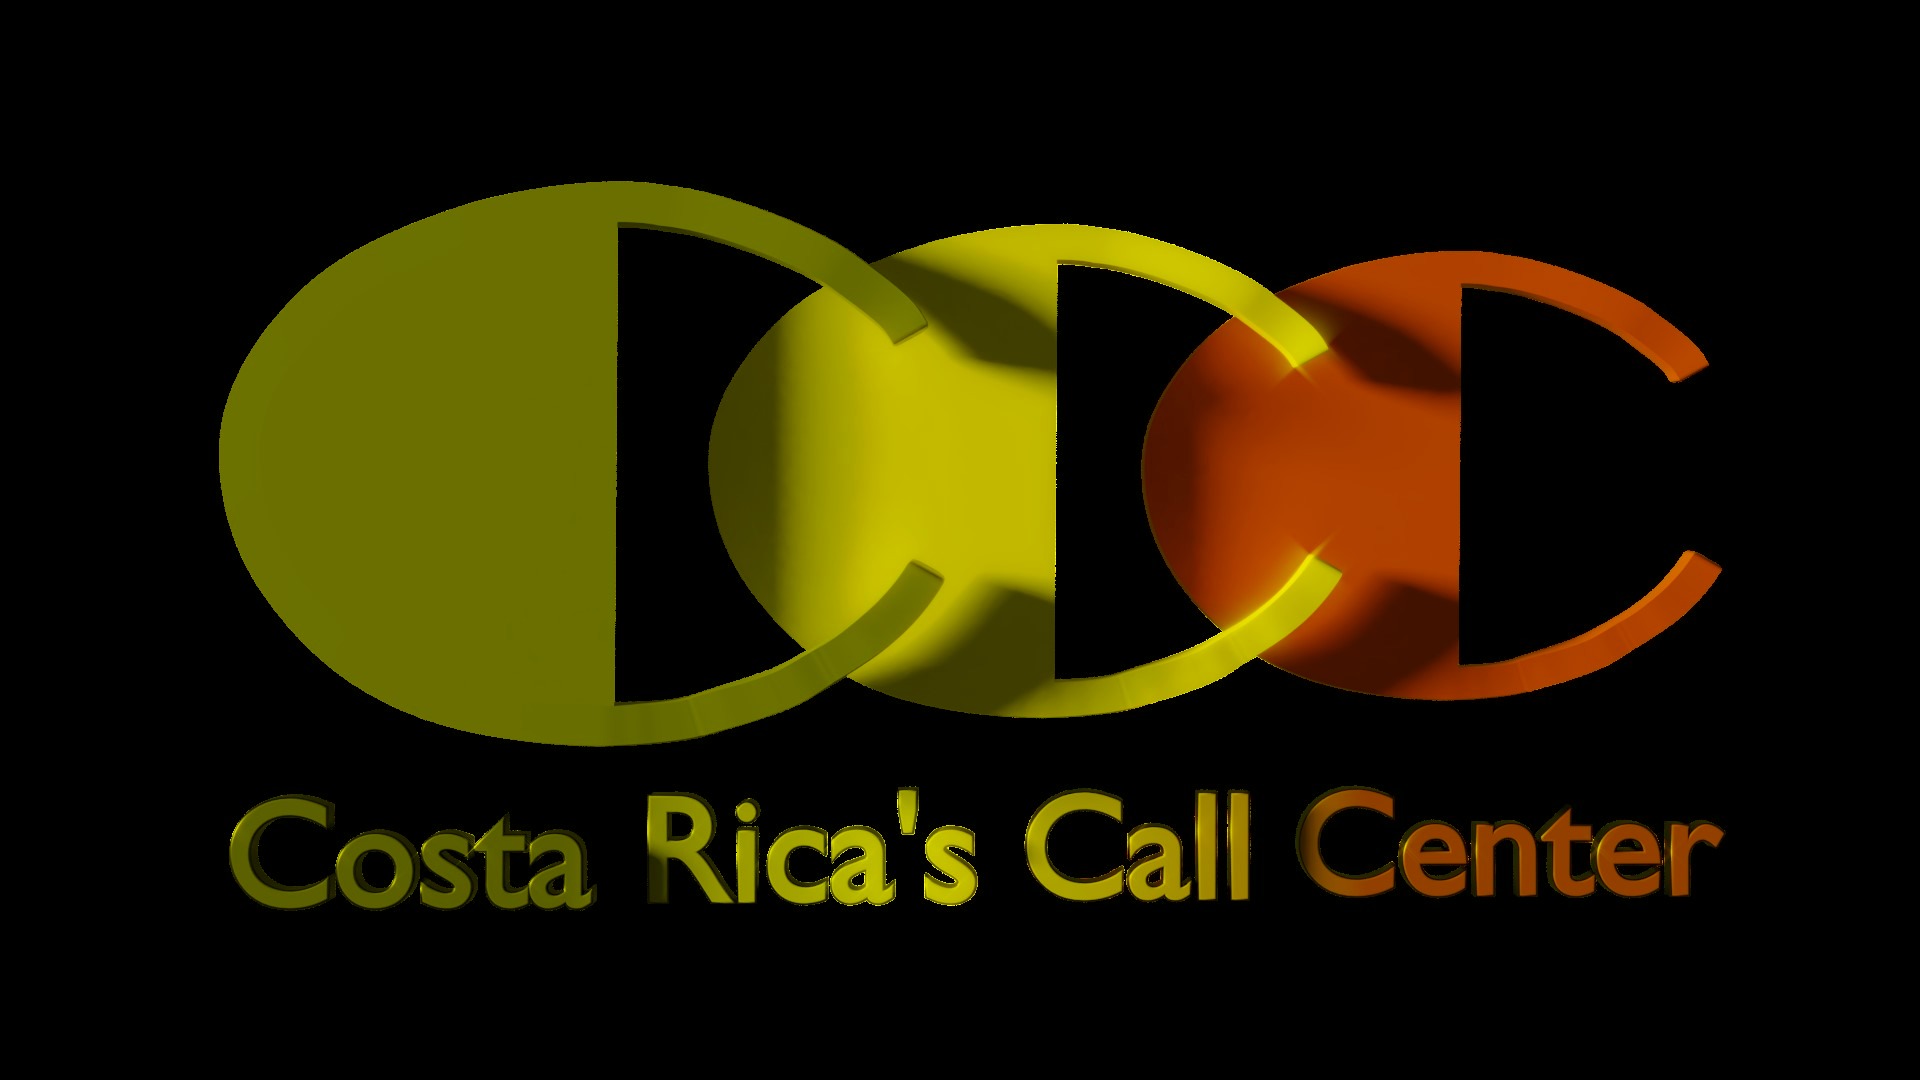 COLD CALL CLIENT LIST COSTA RICA.jpg  by richardblank